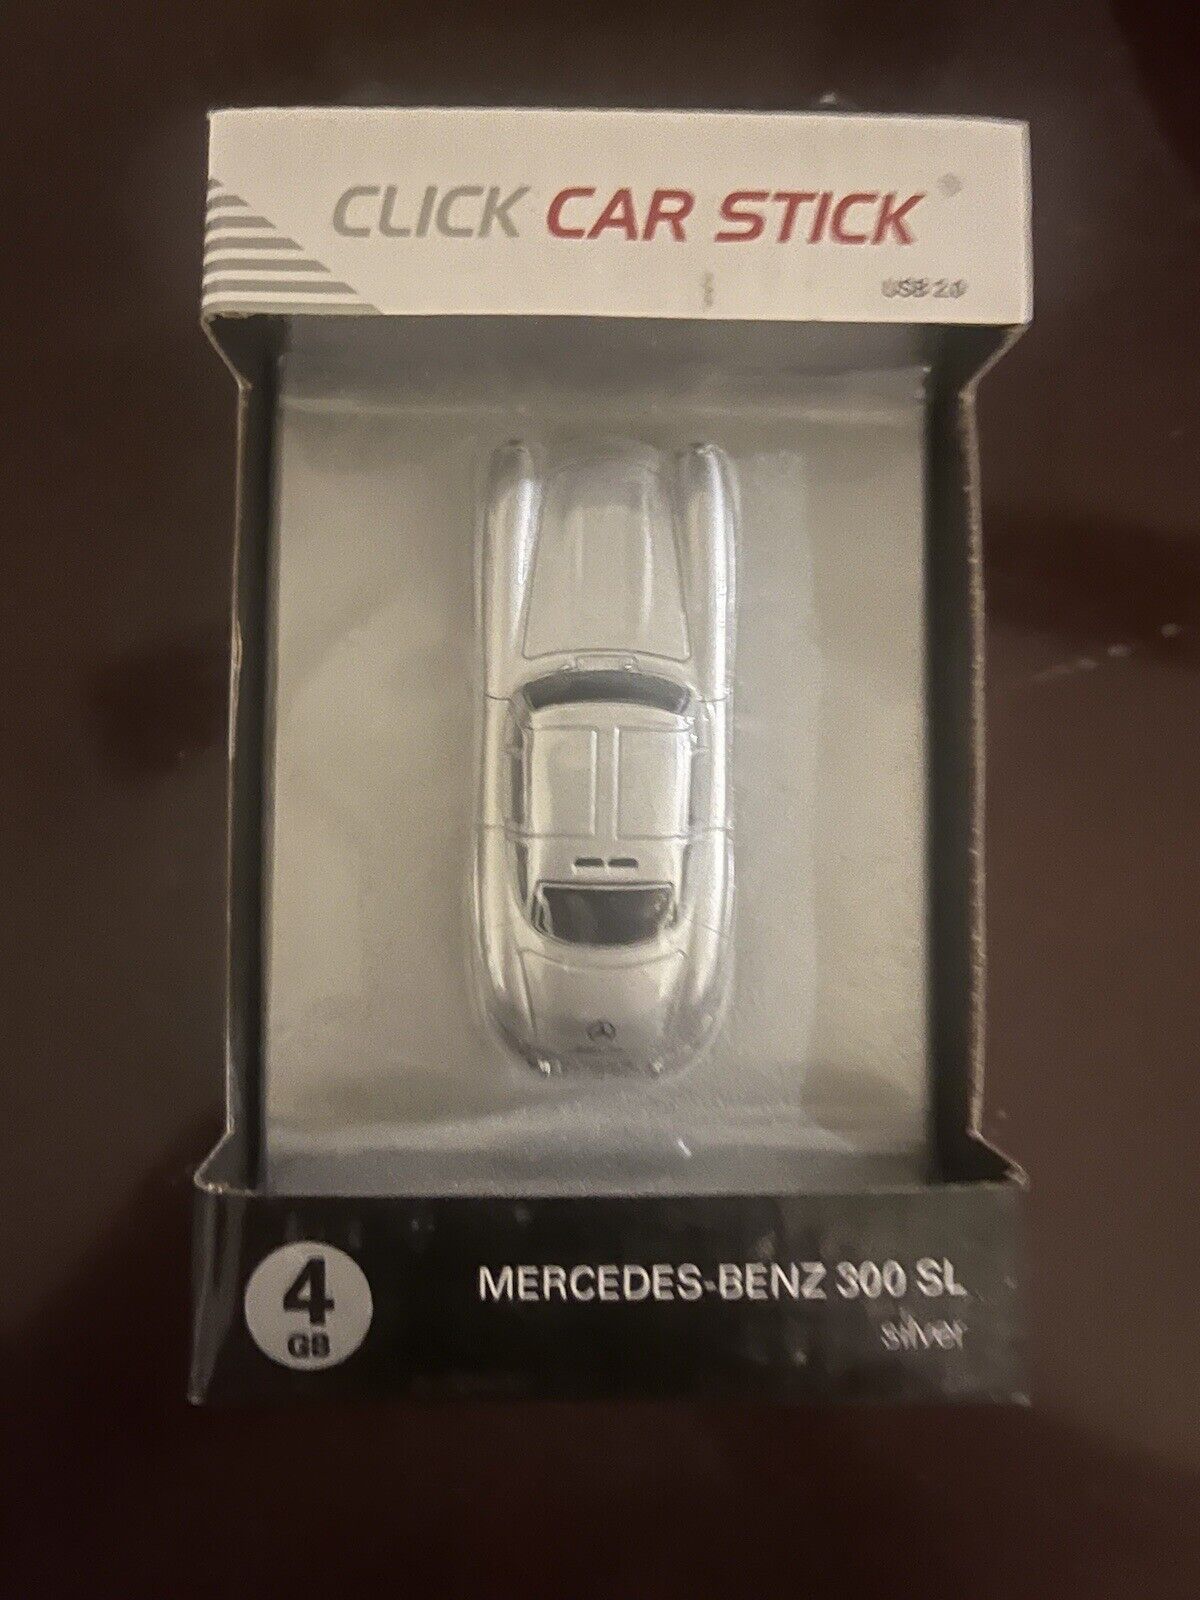 Mercedes-Benz 300 SL USB 2.0 Car Click Stick 4 GB - RARE New In Box. Very Cool